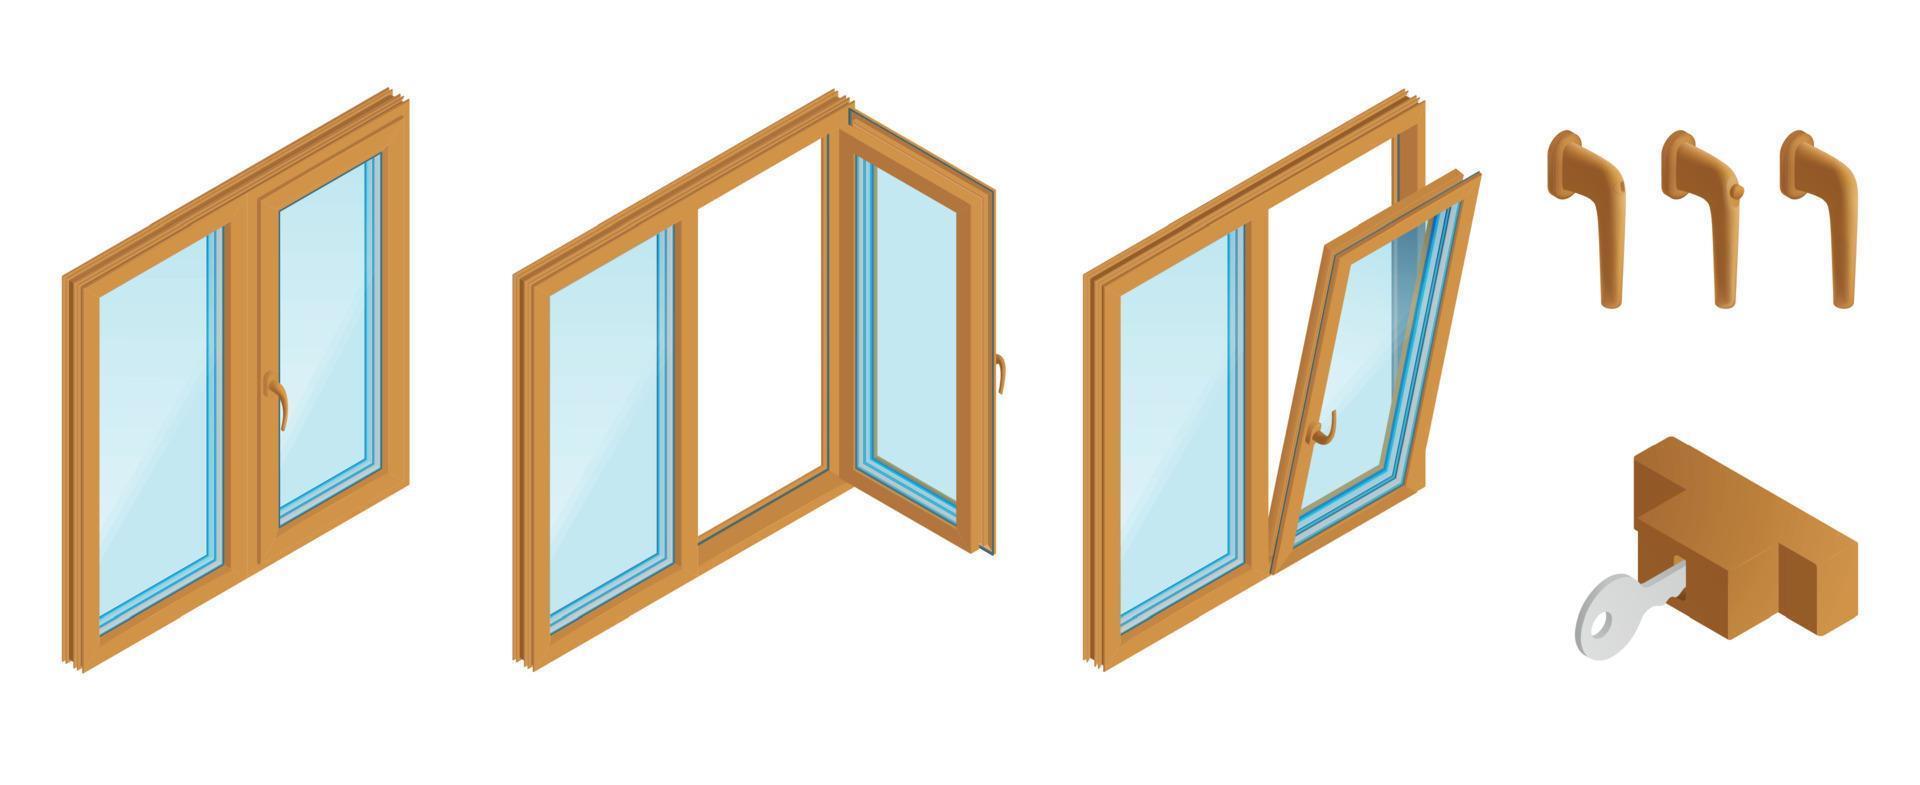 Wooden Windows Isometric Set vector